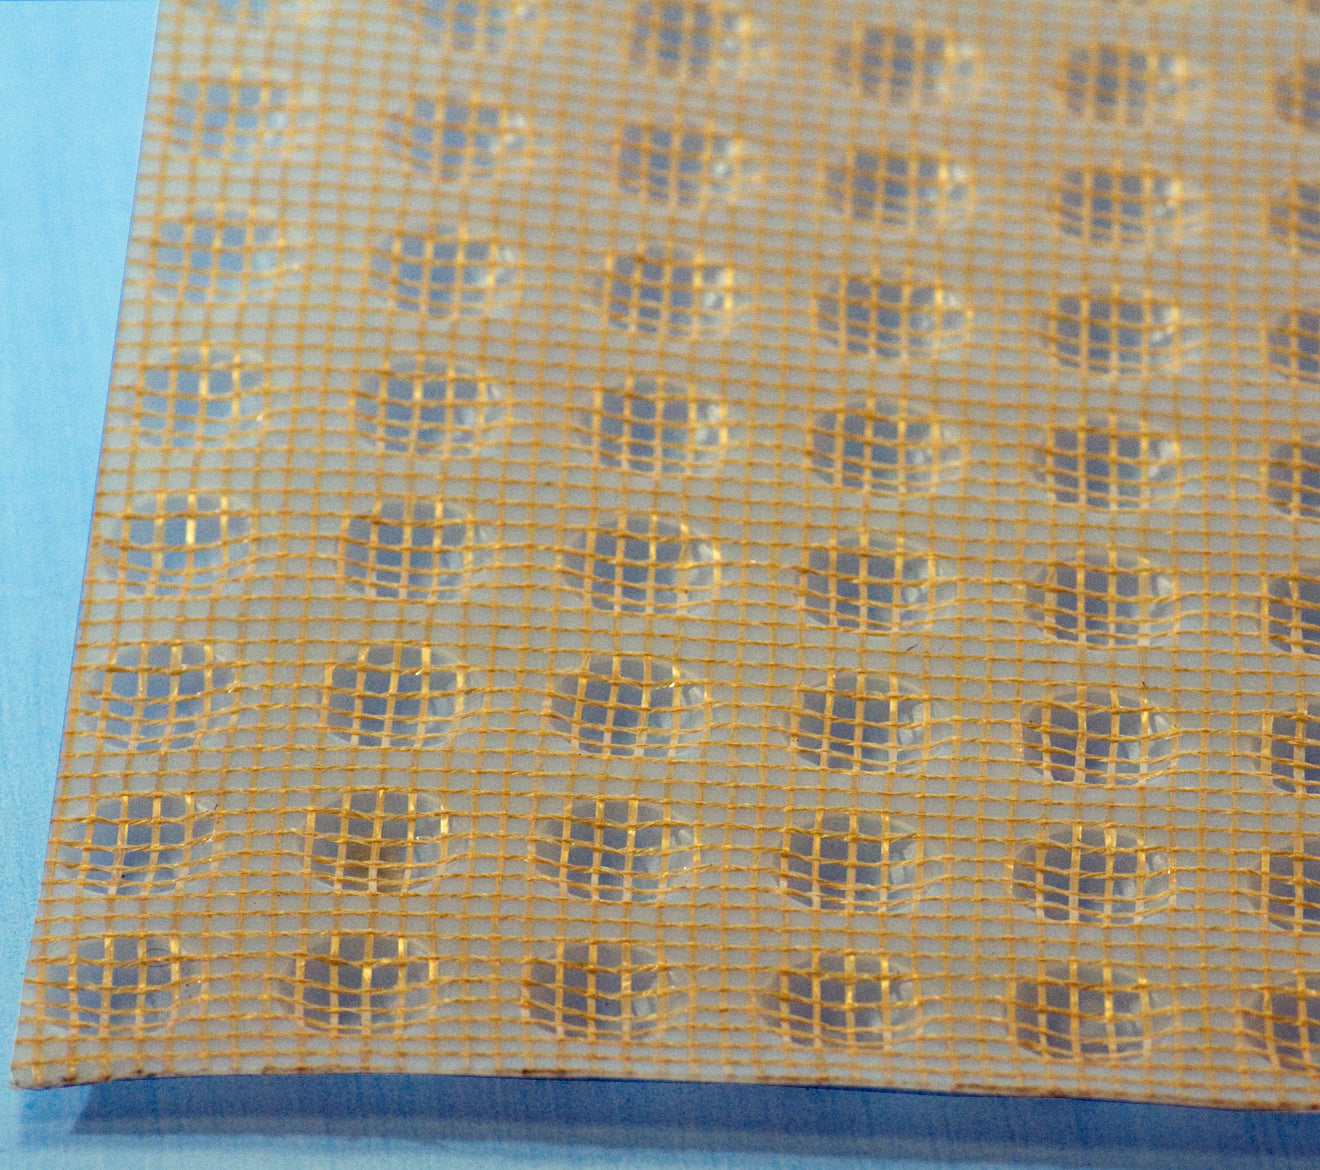 Waterproofing mesh membrane kit for direct plaster applications